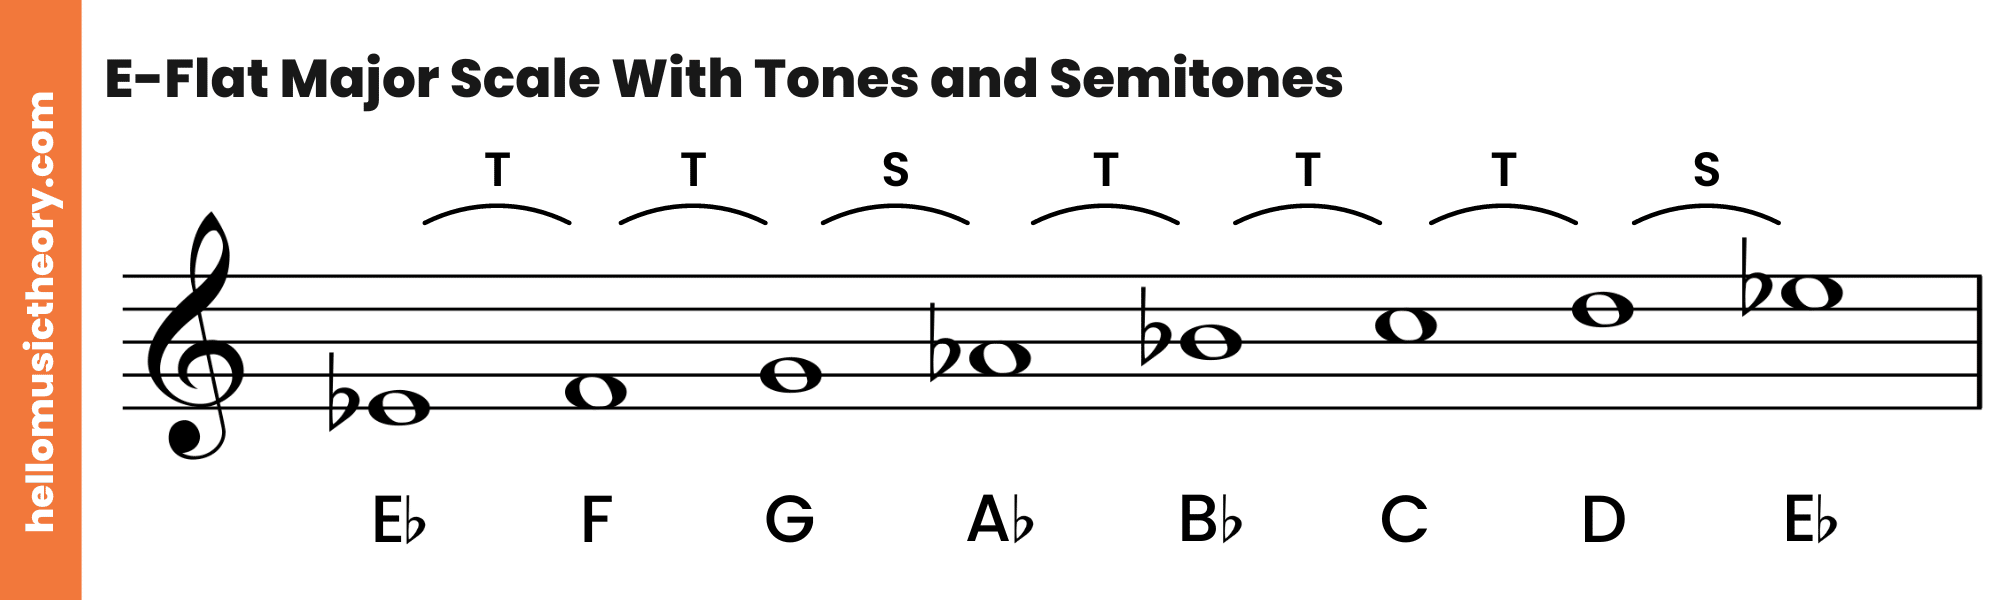 E-Flat Major Scale Treble Clef With Tones and Semitones